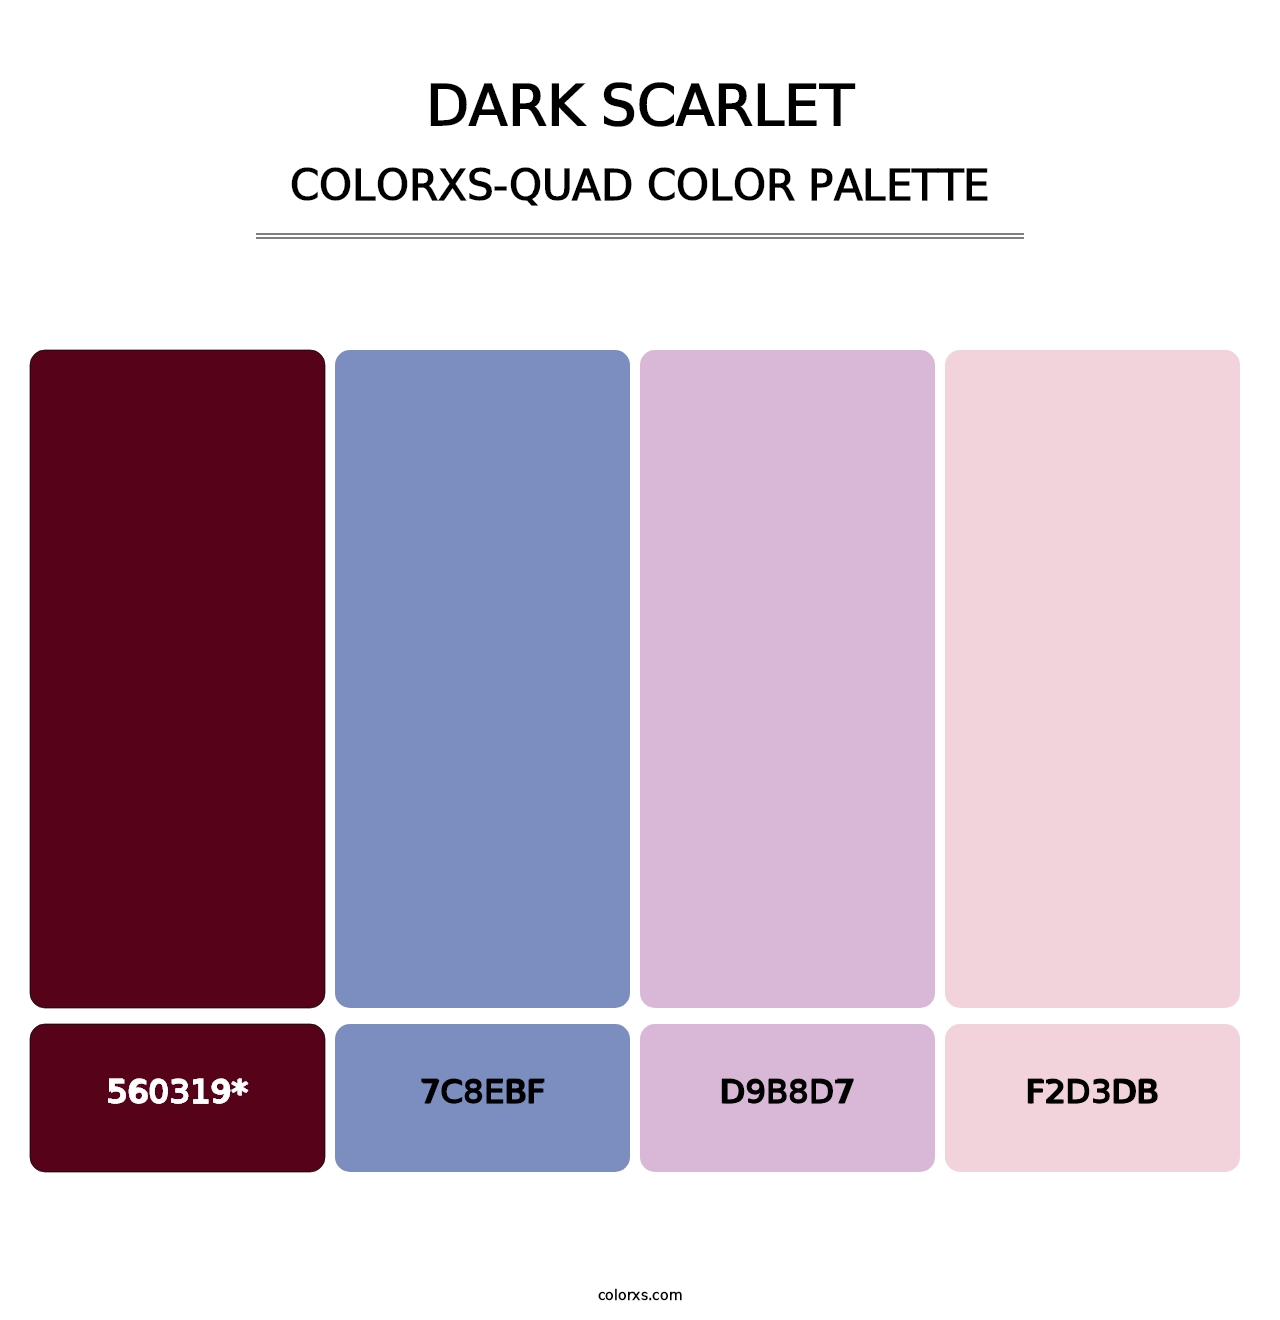 Dark Scarlet - Colorxs Quad Palette